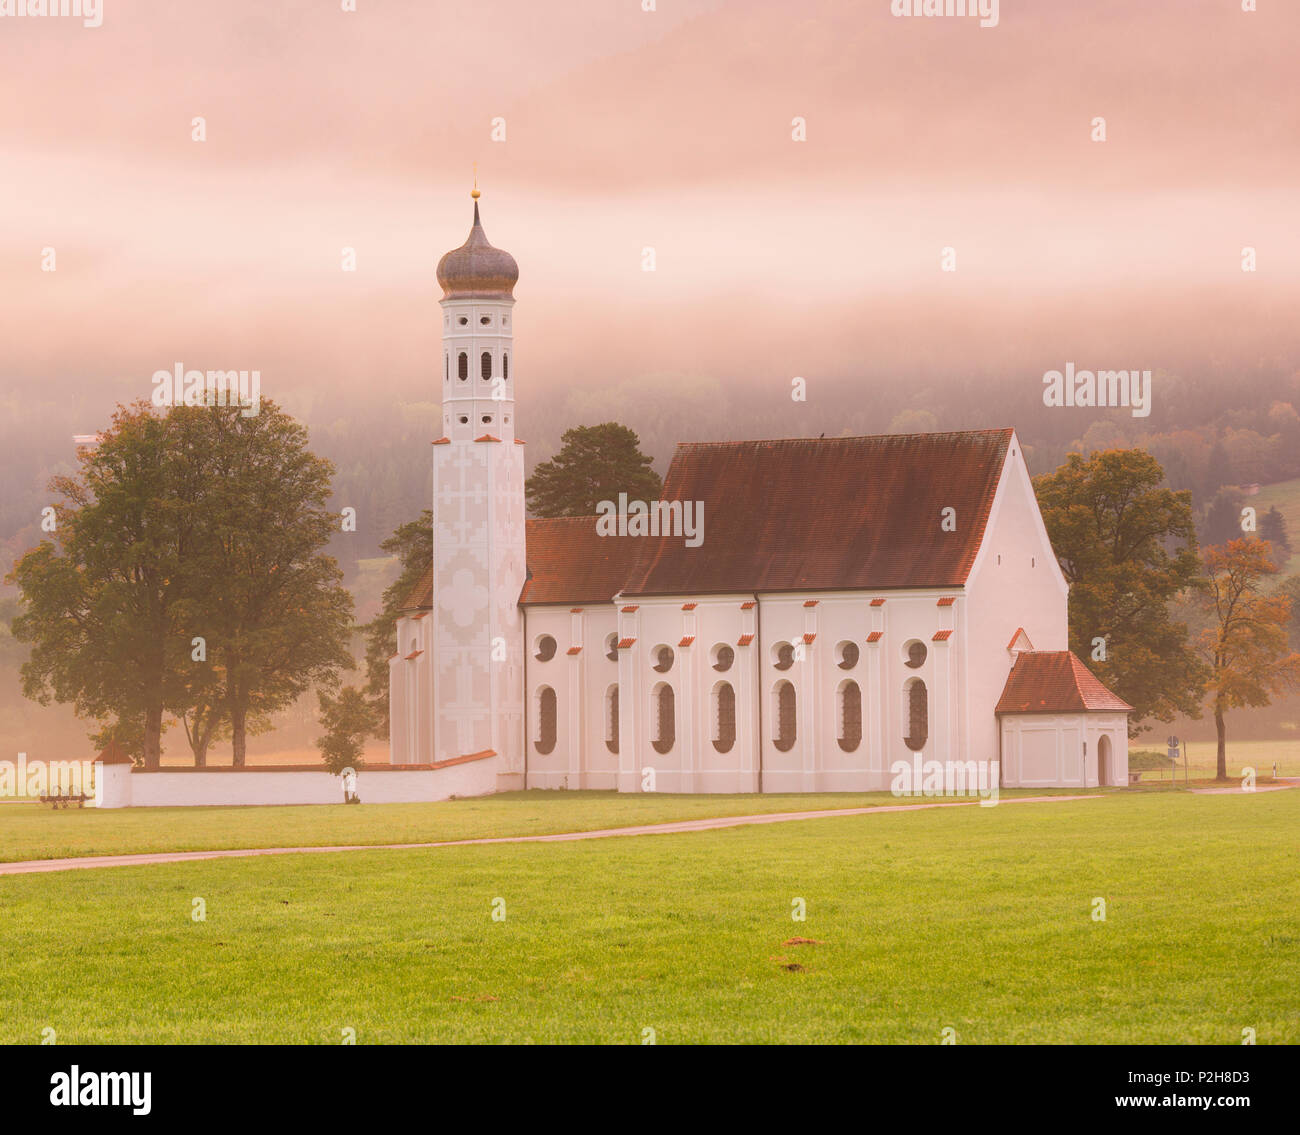 Church of St. Coloman, Fuessen, Allgaeu, Upper Bavaria, Bavaria, Germany Stock Photo